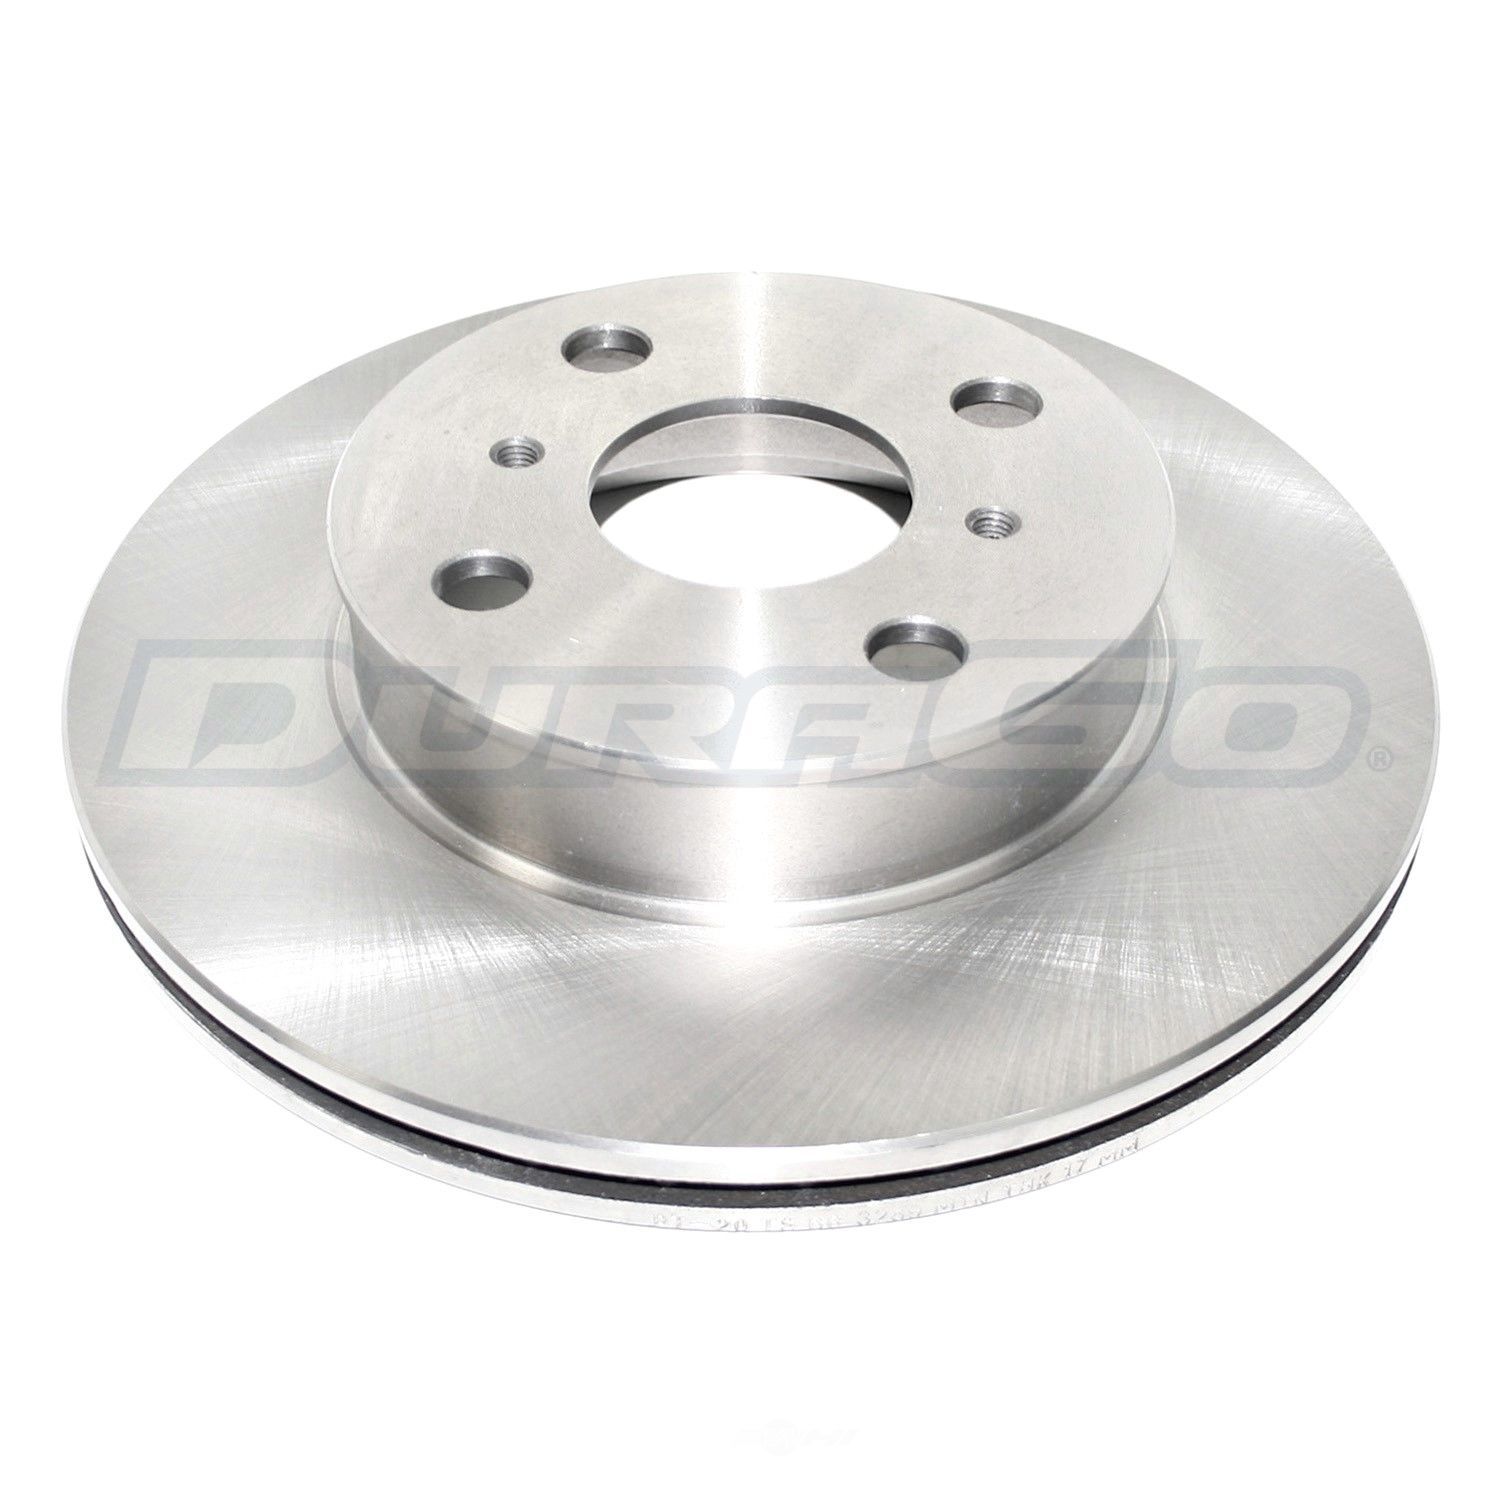 DURAGO - Disc Brake Rotor - D48 BR3289